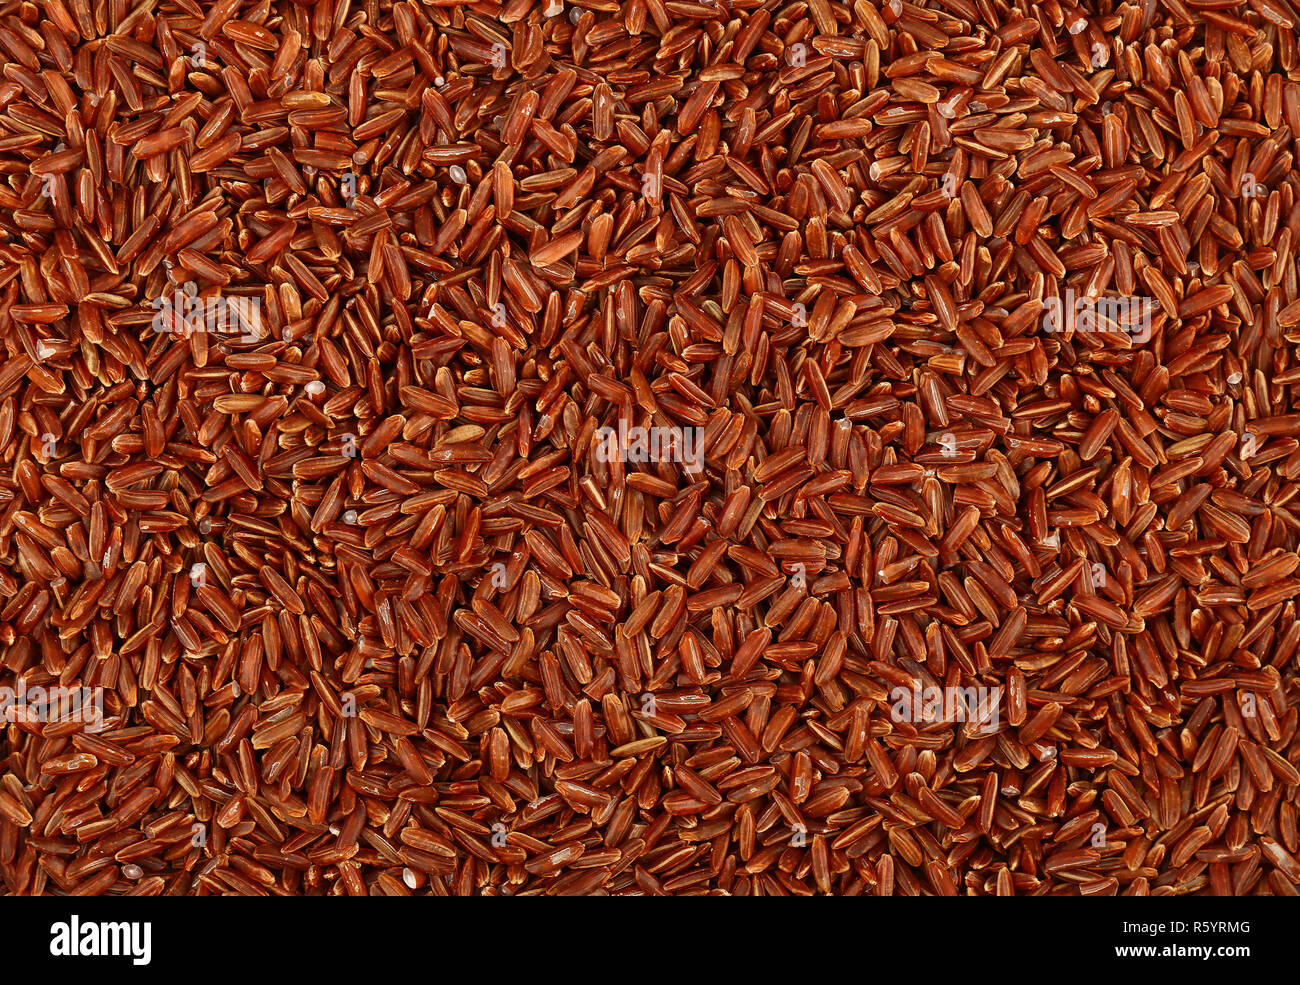 Rot Braun roher Reis Nahaufnahme Hintergrund Stockfoto